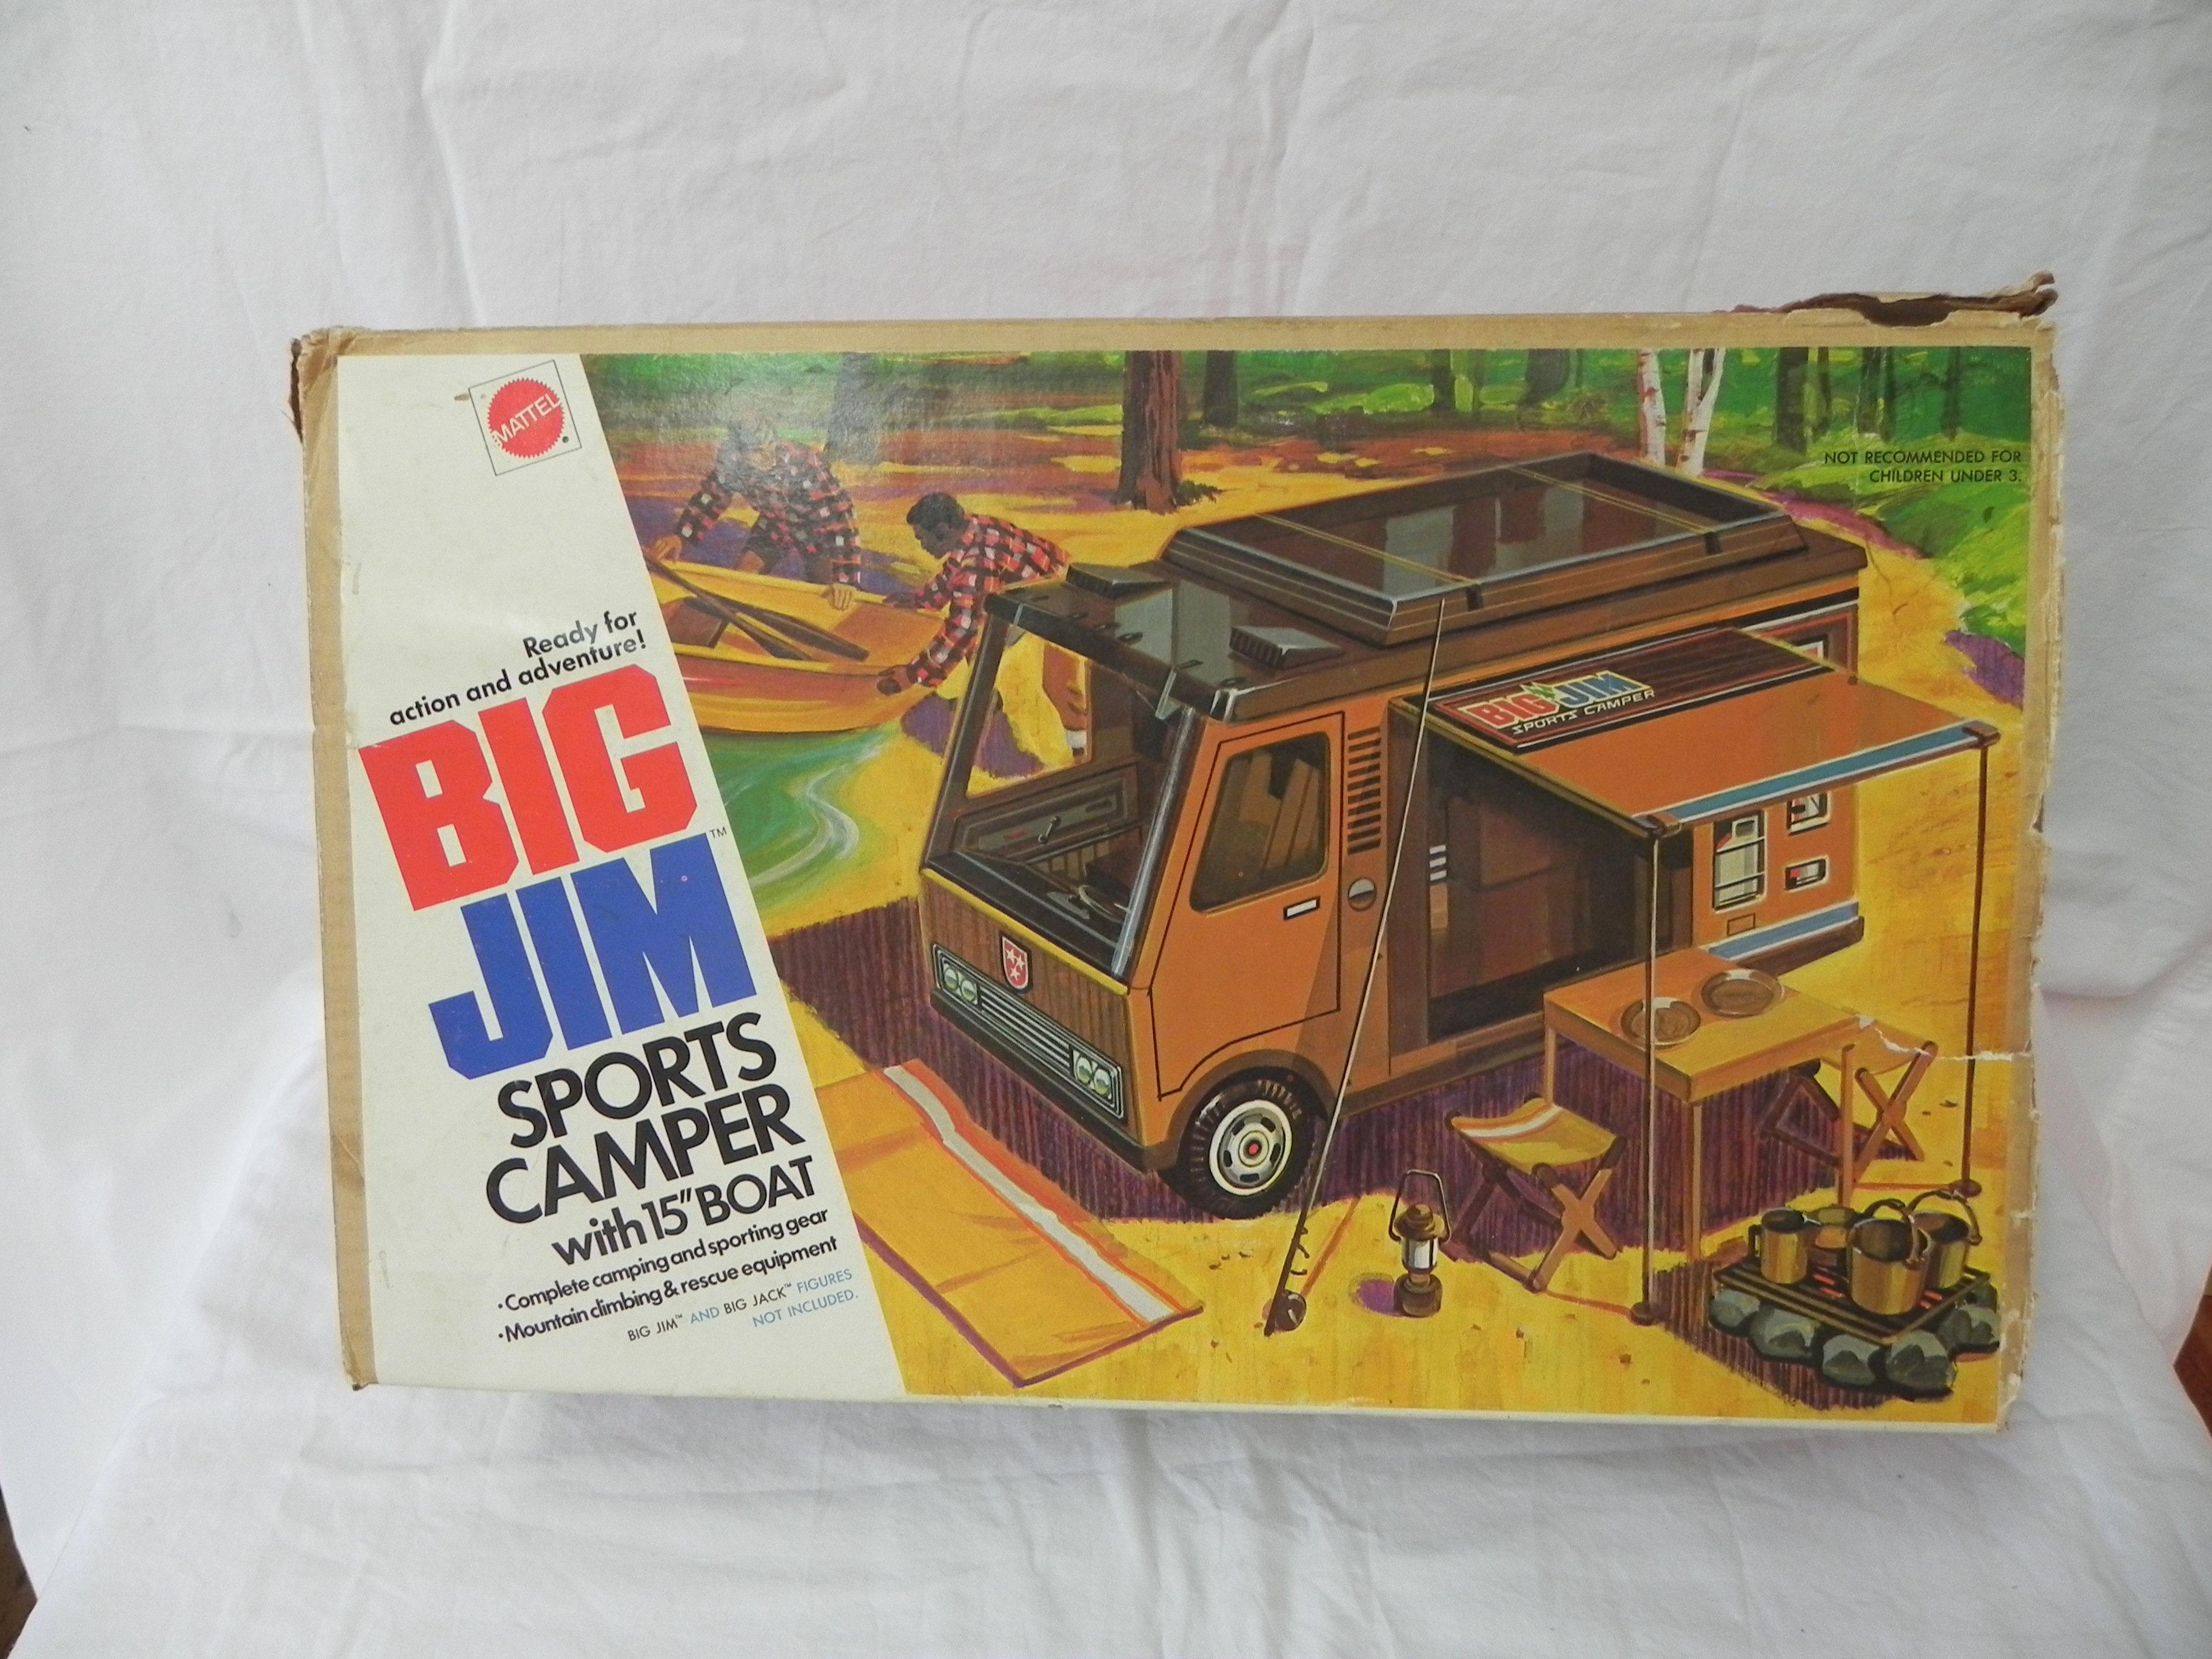 Mattel “Big Jim” Sports Camper